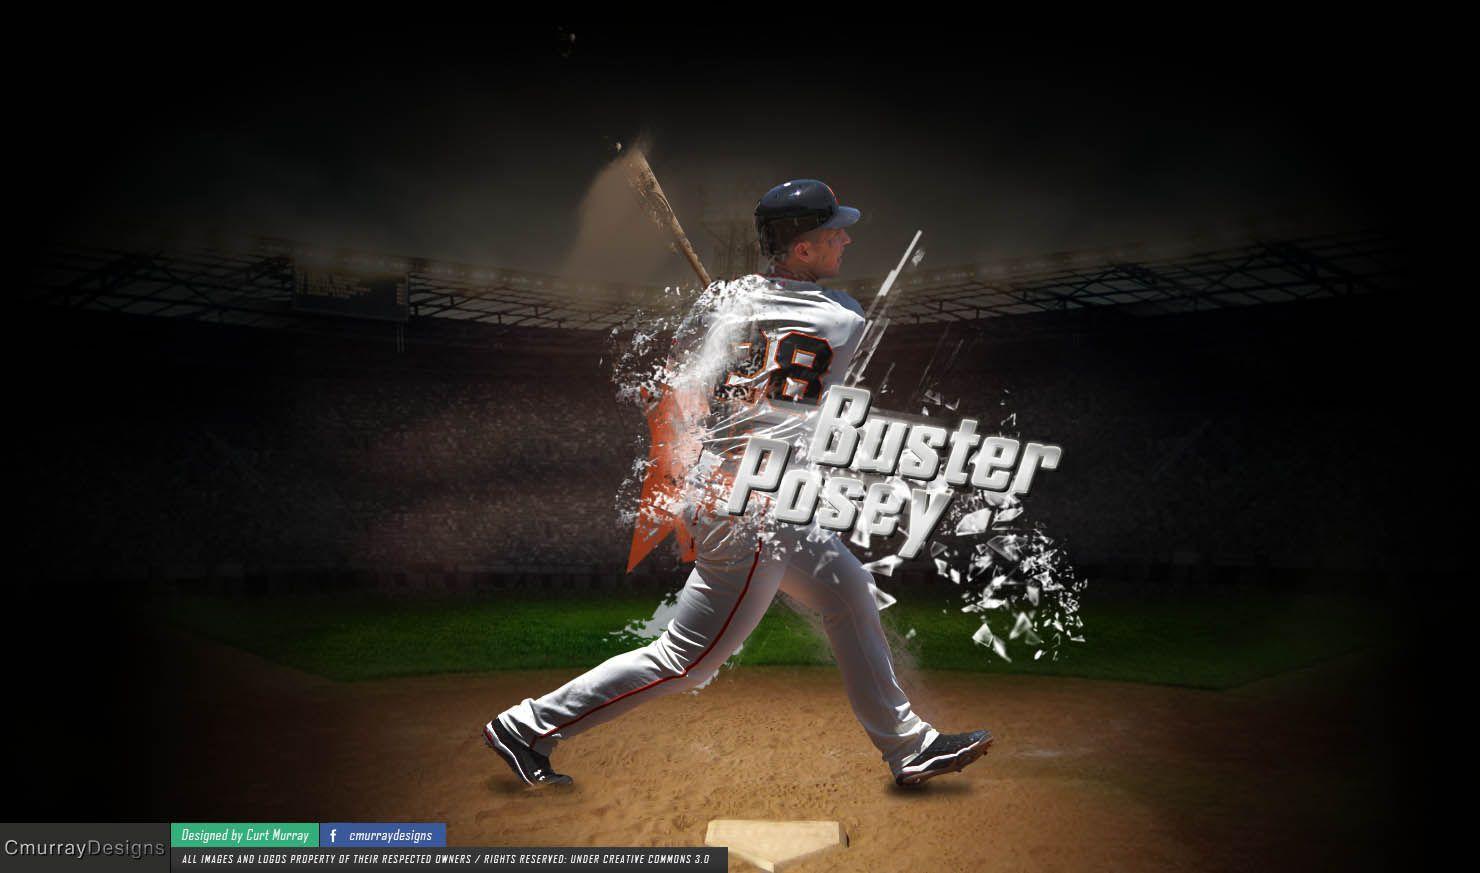 Buster Posey Wallpaper - iXpap  Buster posey, Sf giants baseball